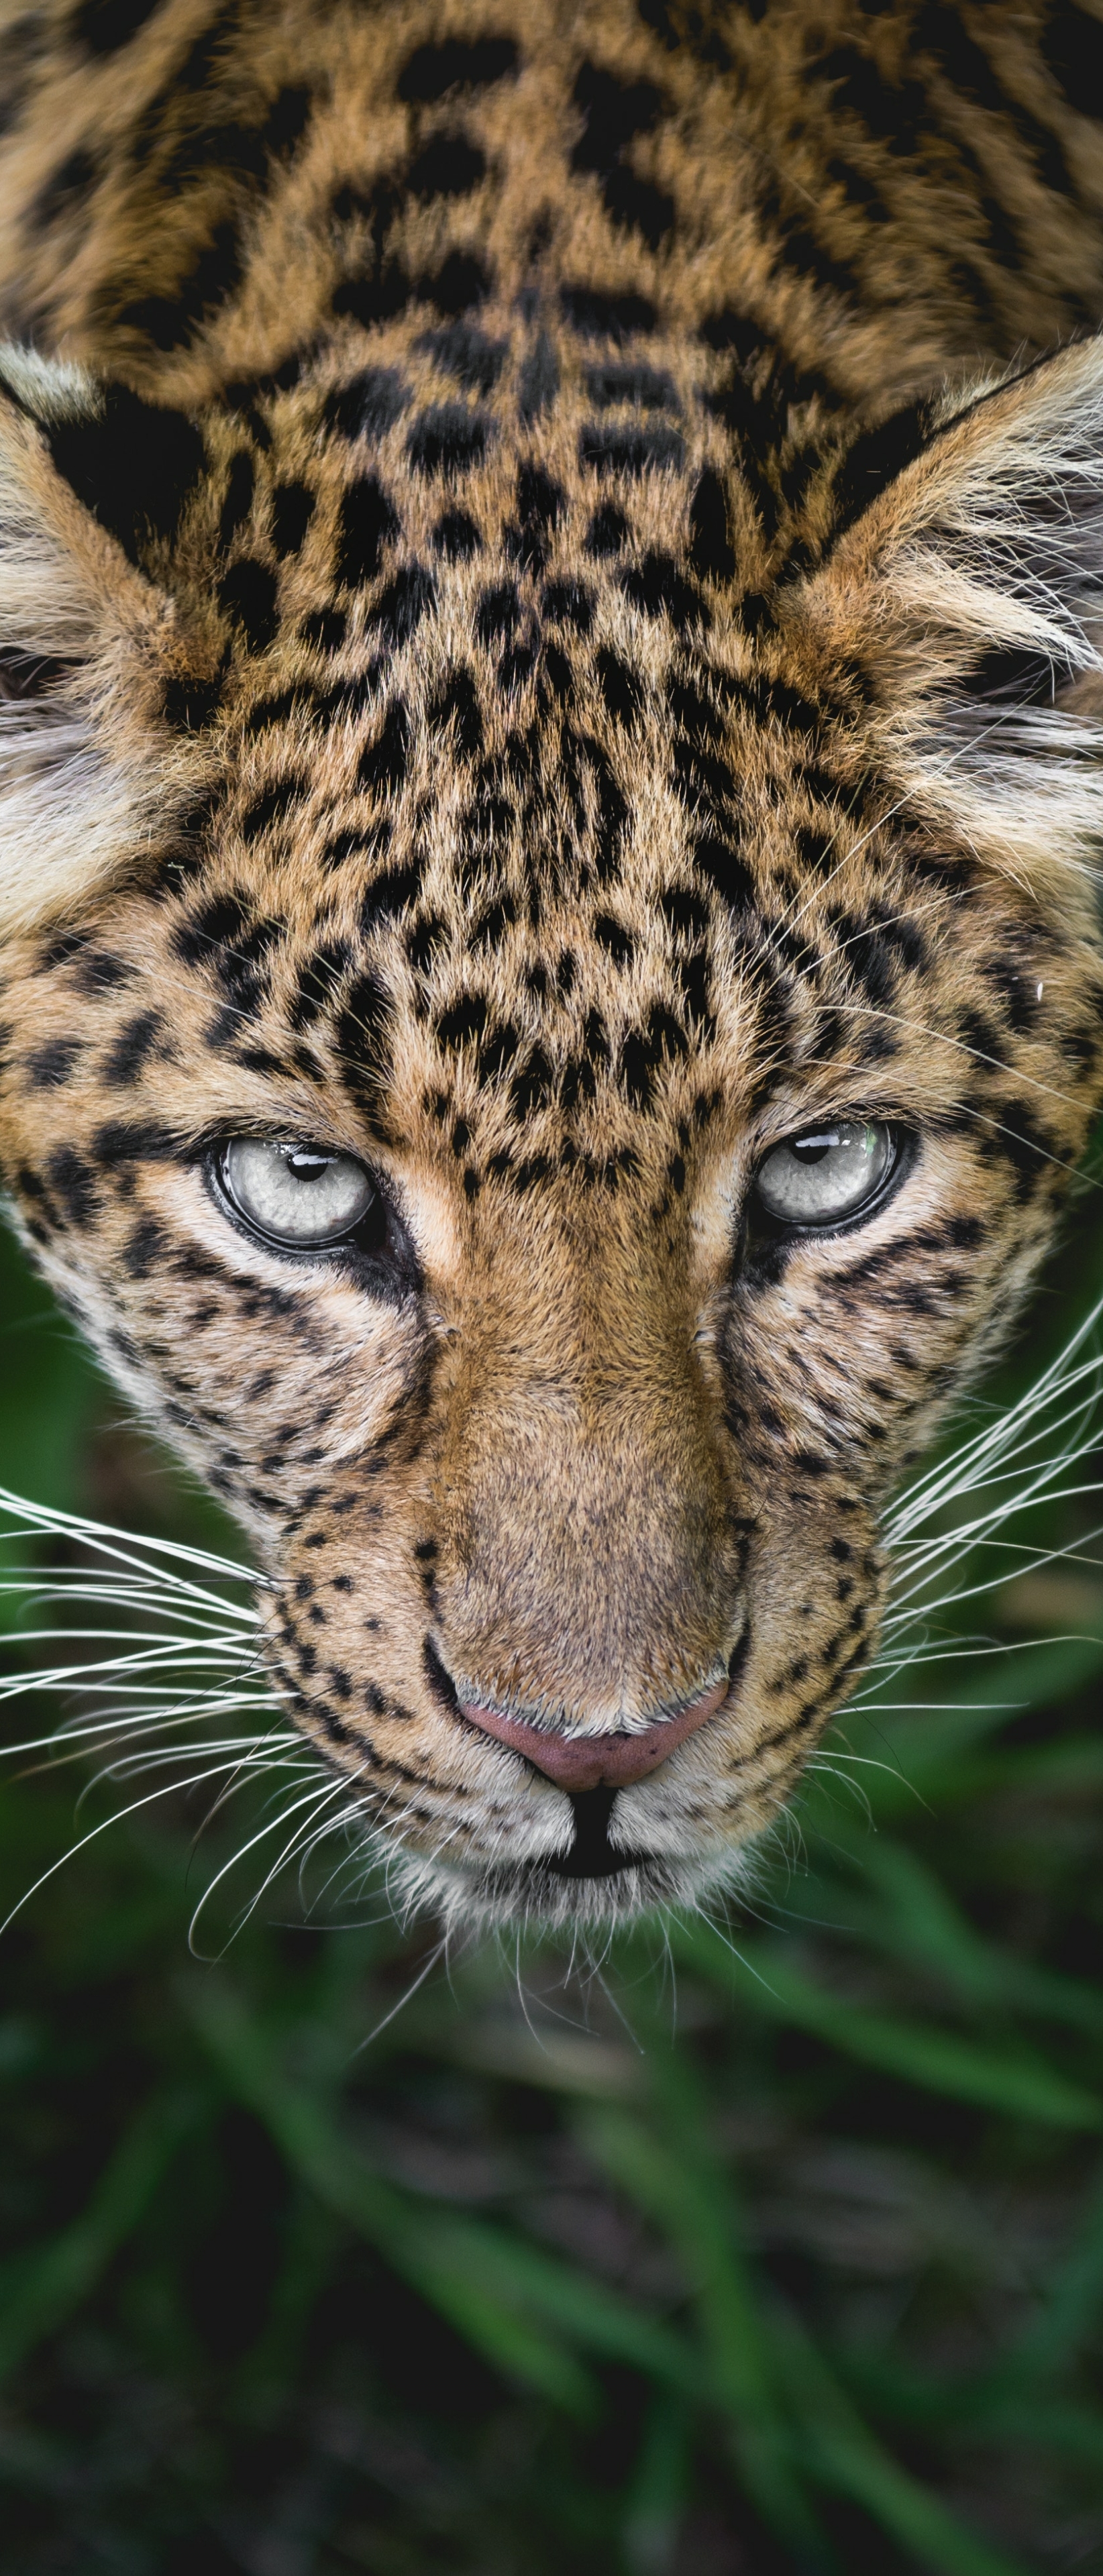 Descarga gratuita de fondo de pantalla para móvil de Animales, Gatos, Leopardo, Cara, Mirar Fijamente.